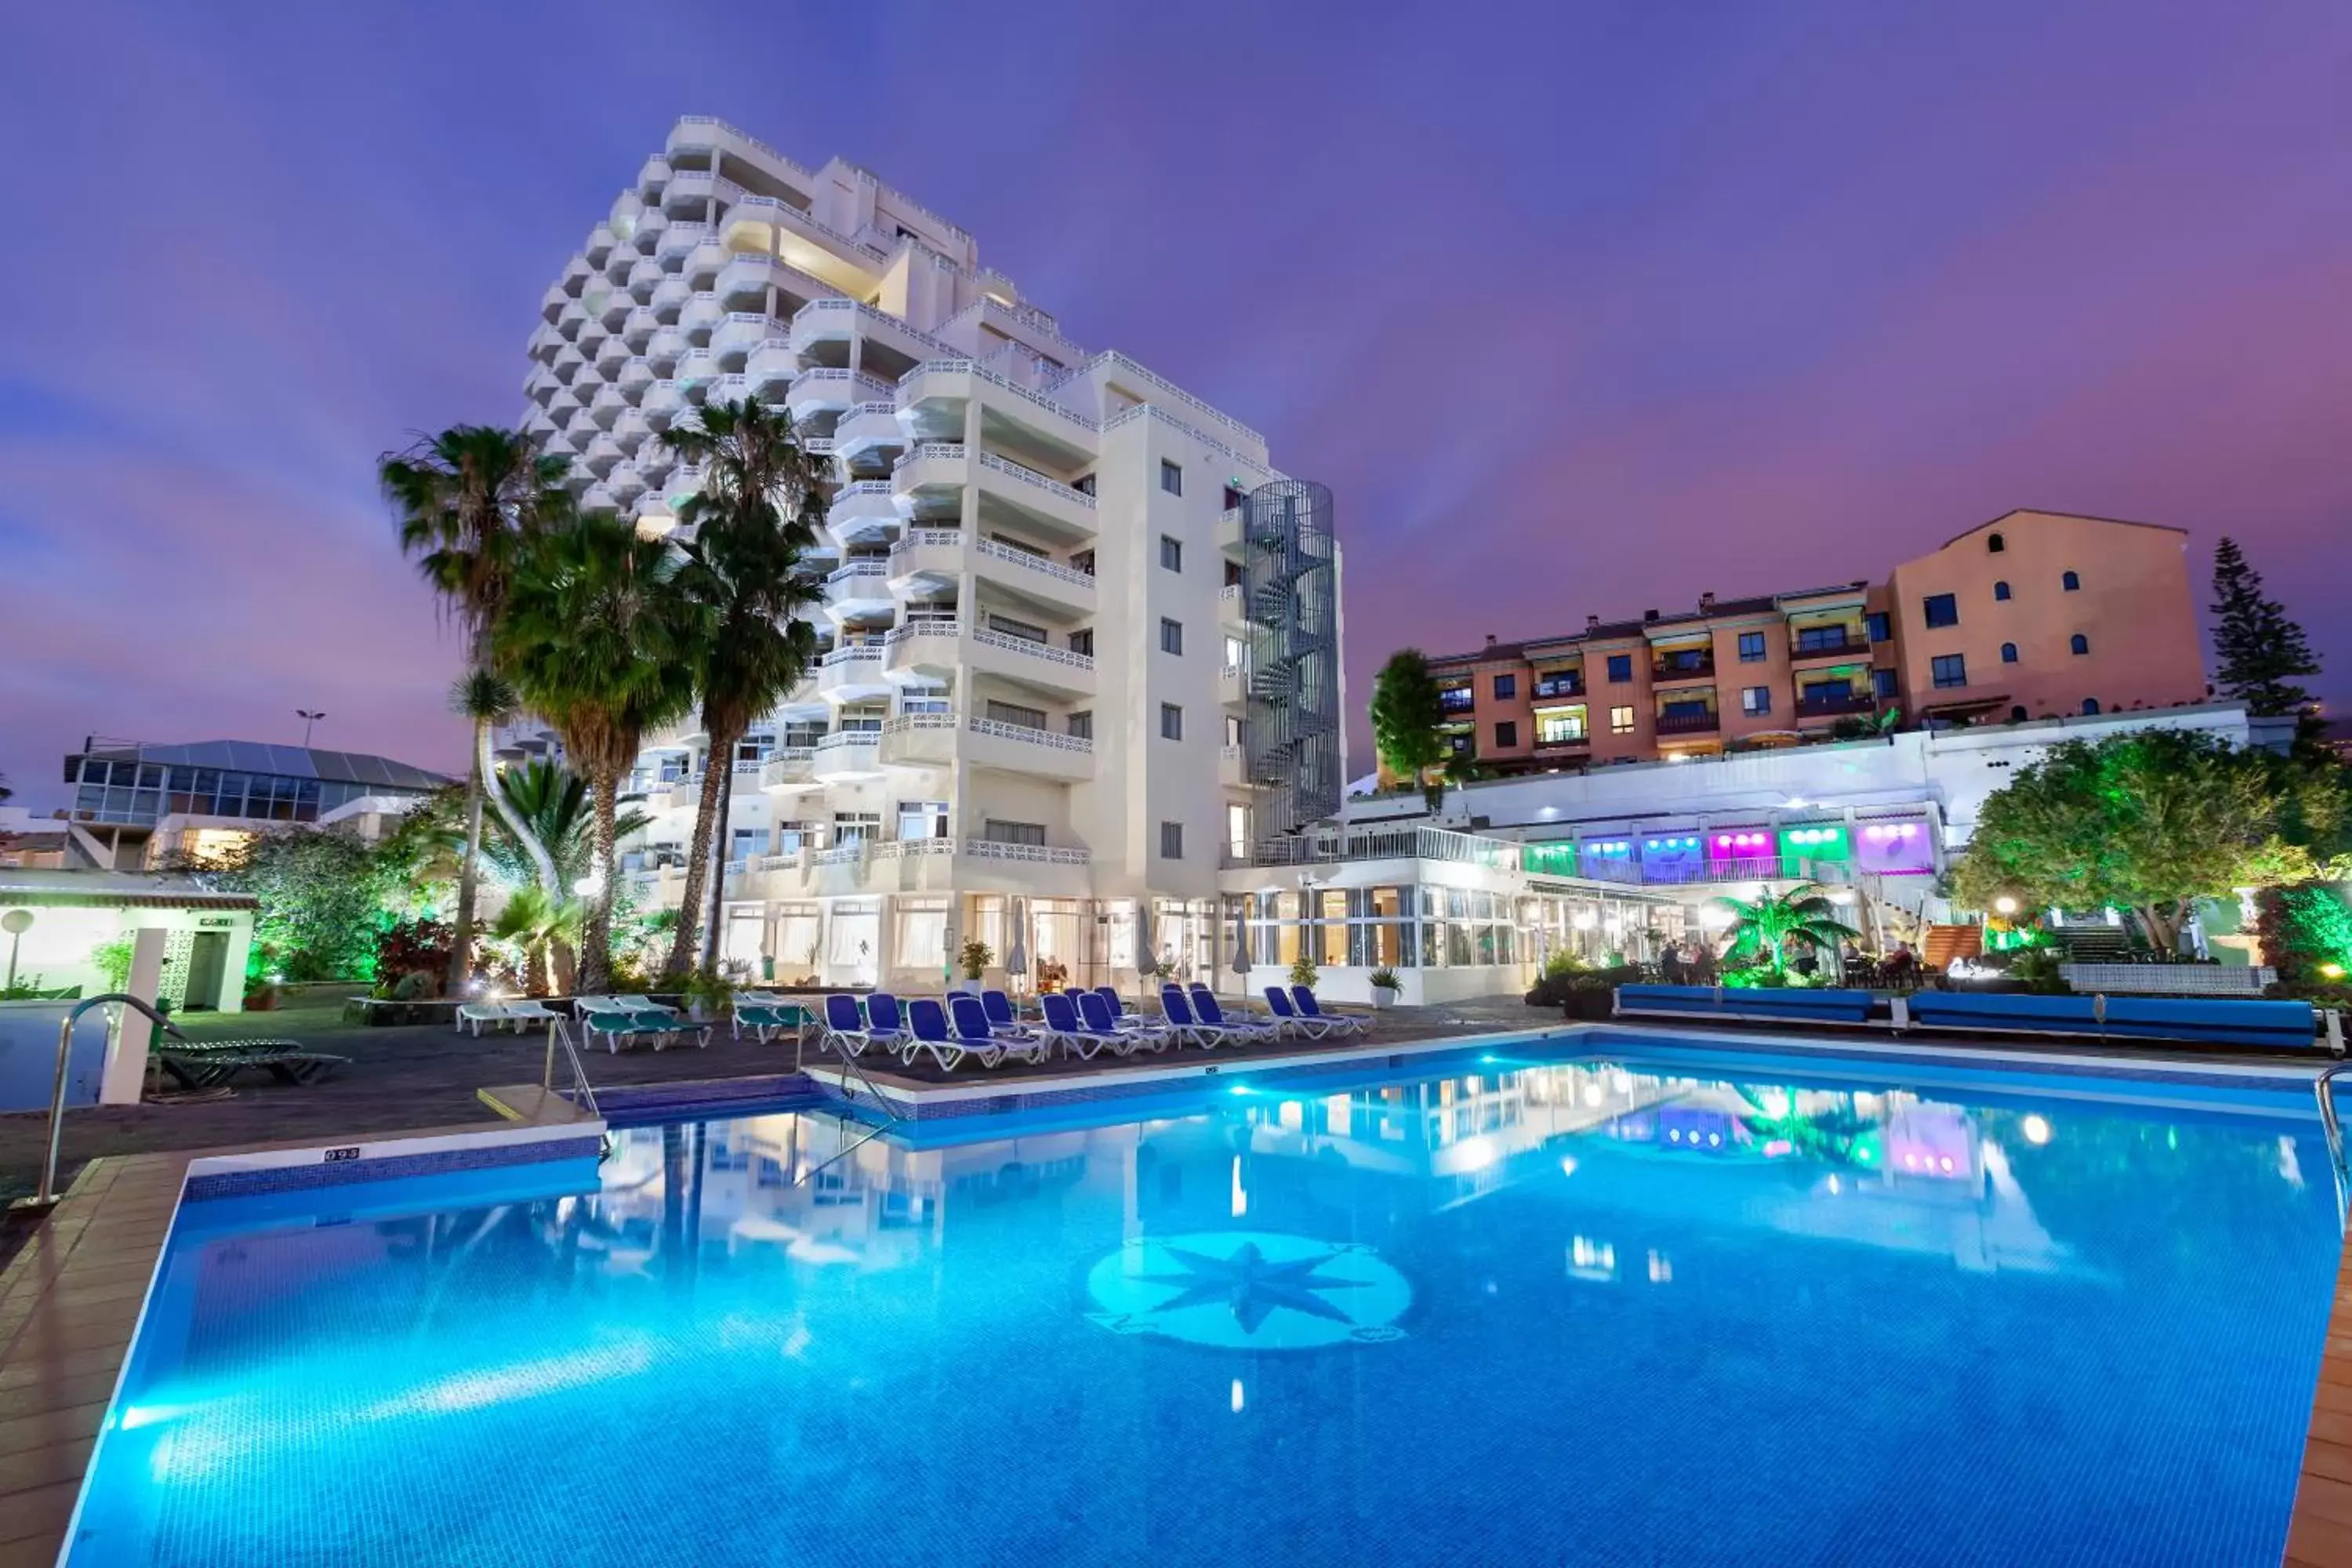 Swimming pool in Hotel Panoramica Garden